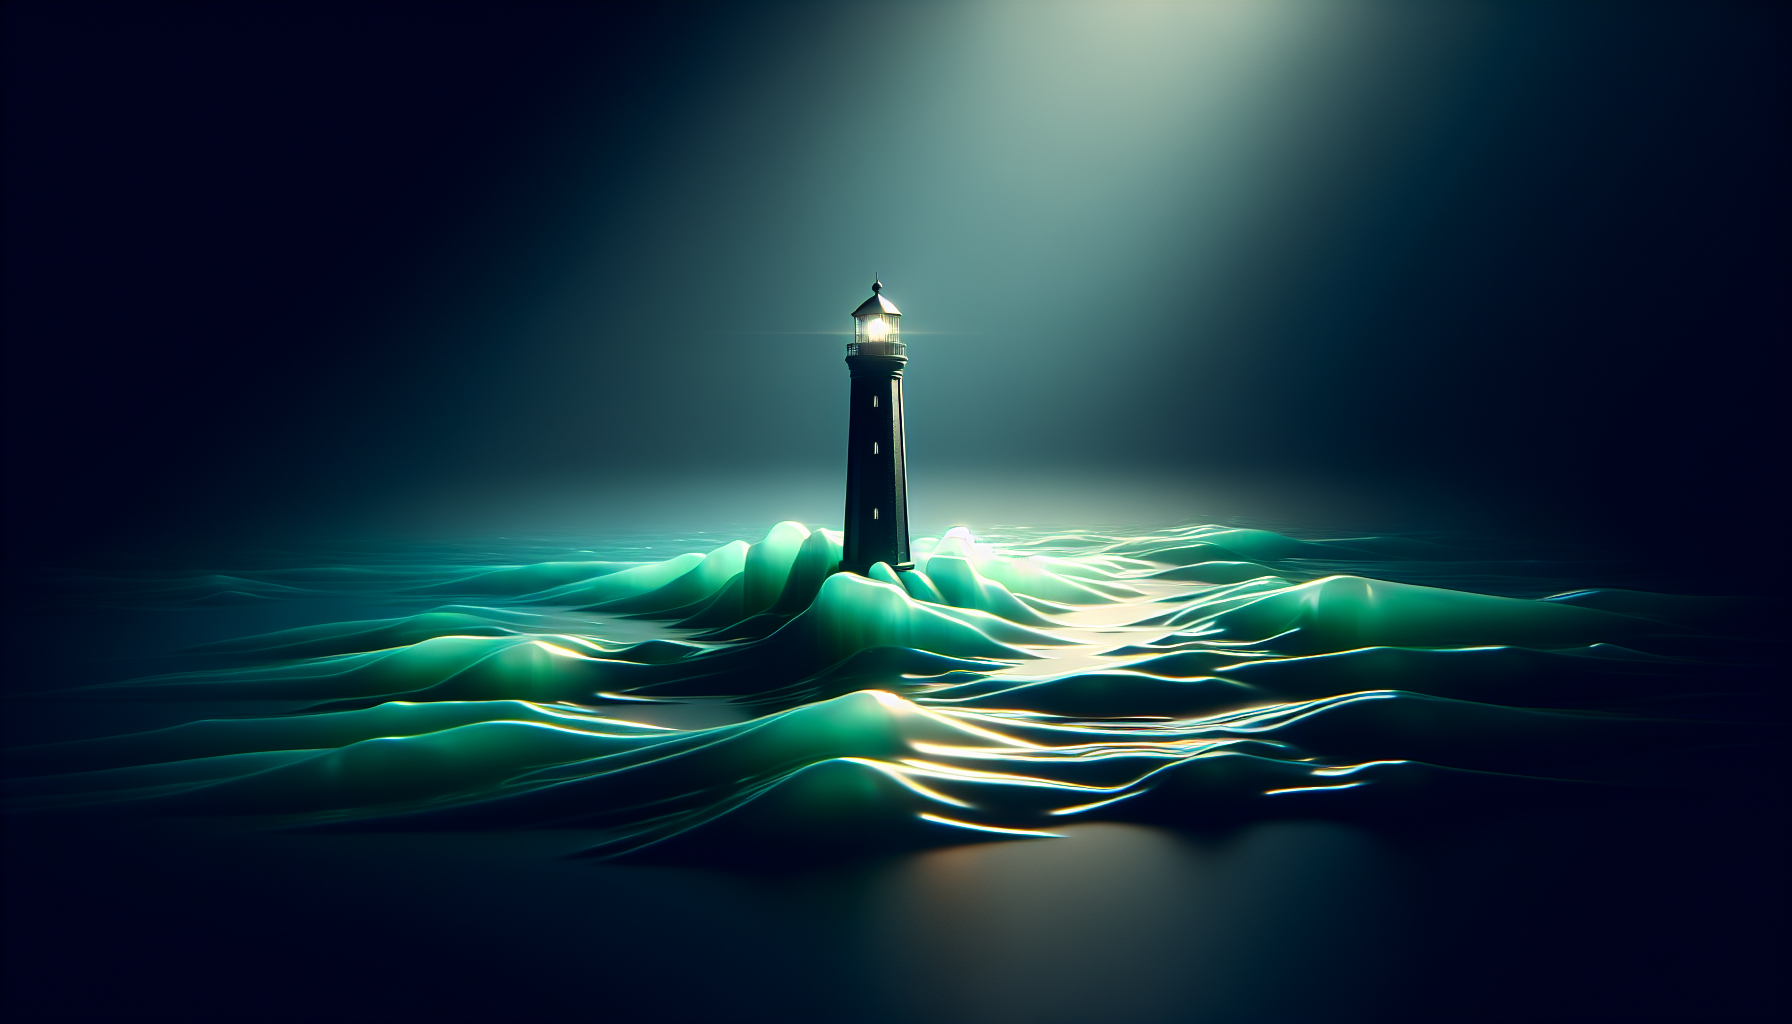 Lighthouse in a digital ocean